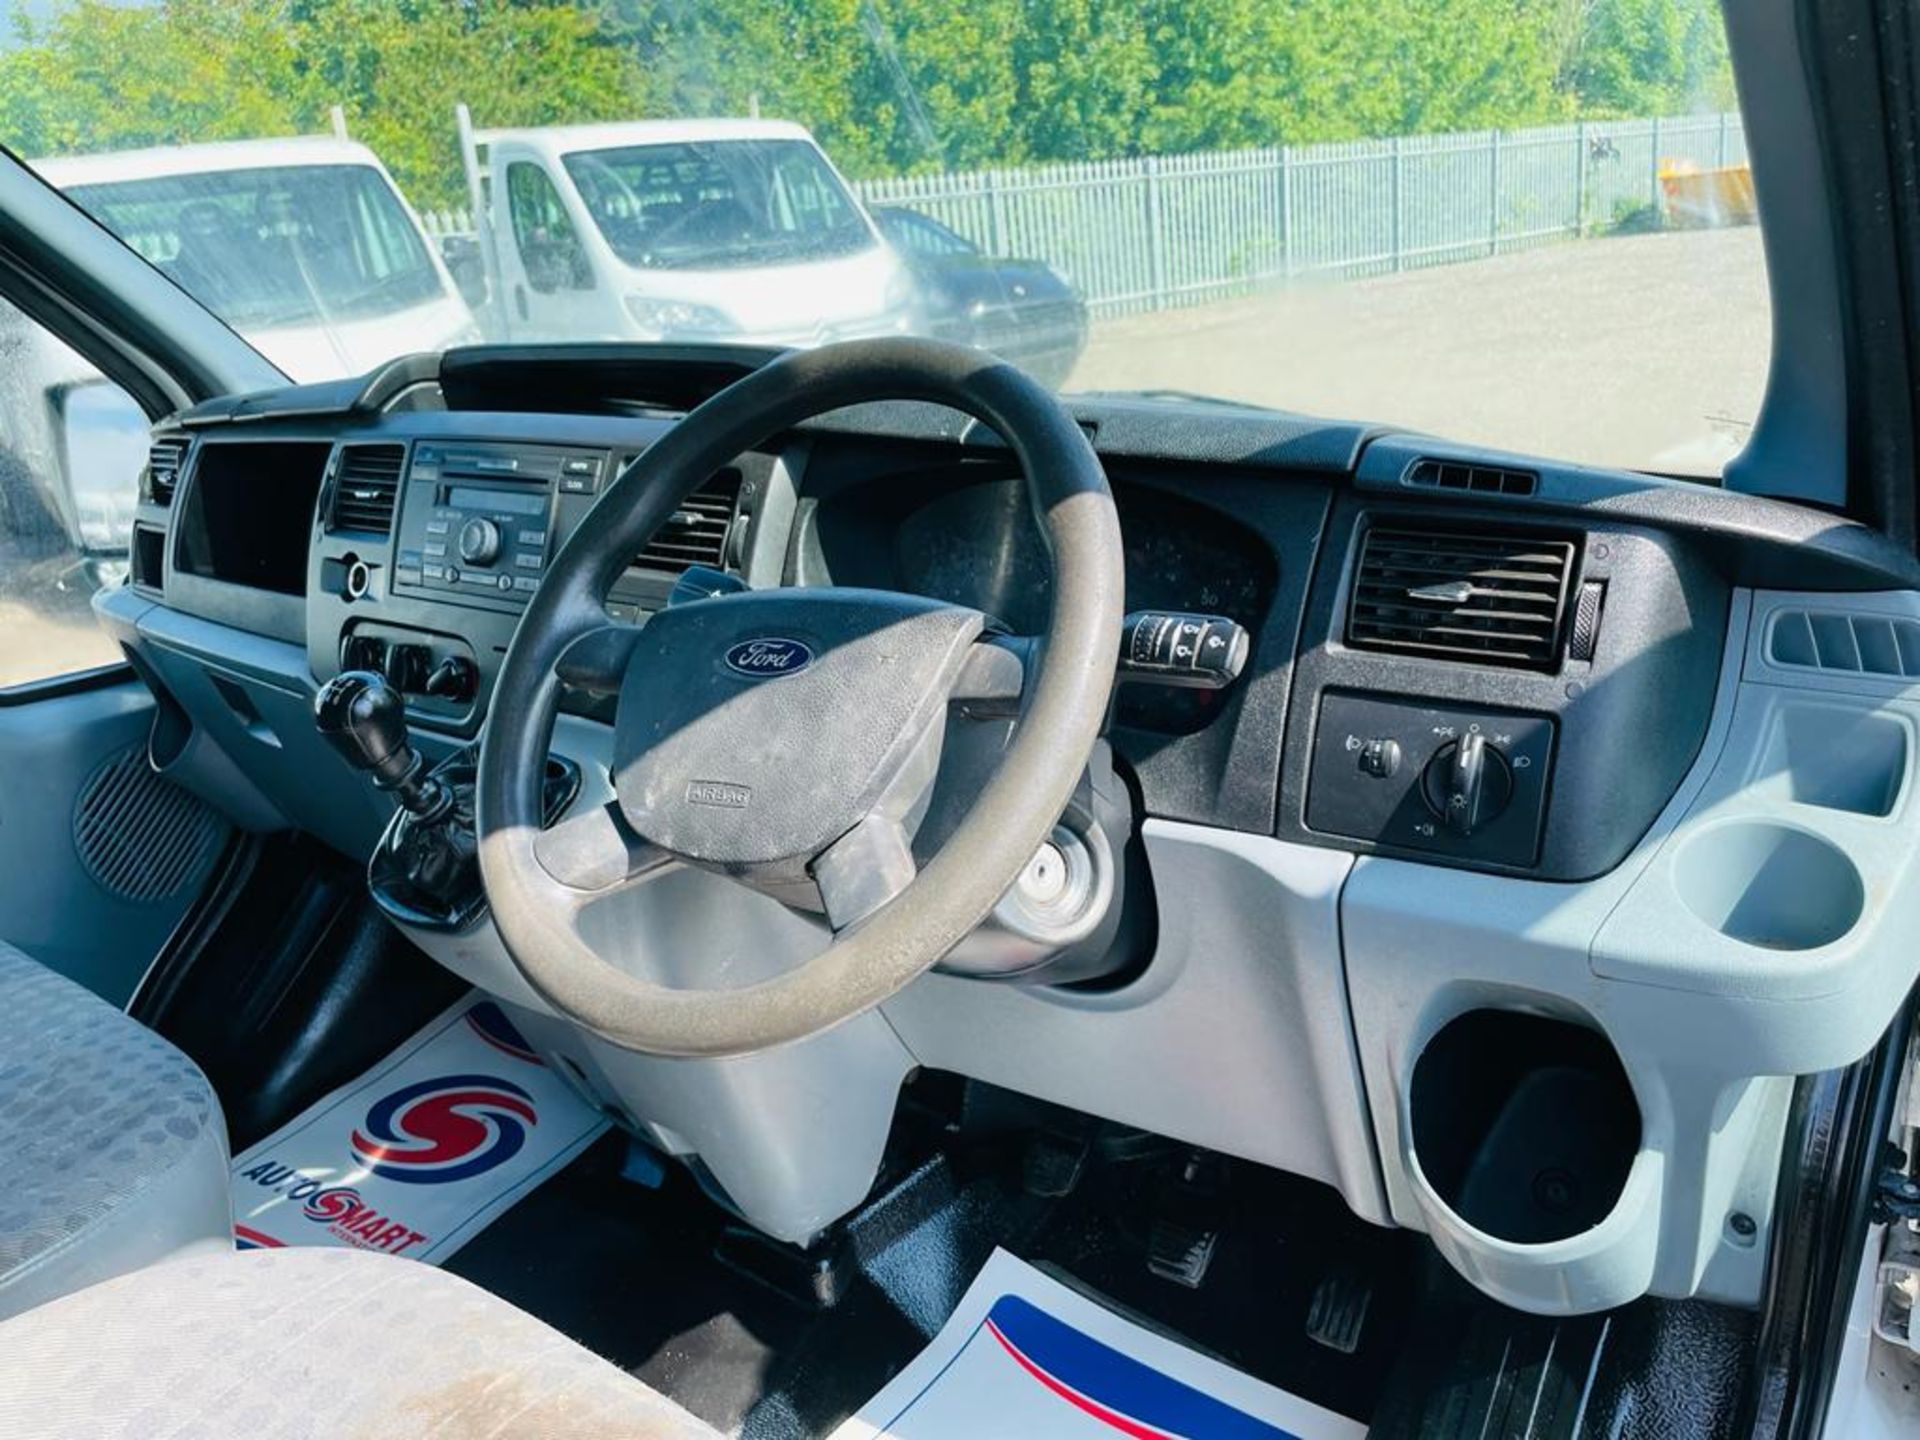 ** ON SALE ** Ford Transit 2.2 TDCI L1 H1 2012 ‘12 Reg’ Short wheel base - Panel Van - Image 17 of 24